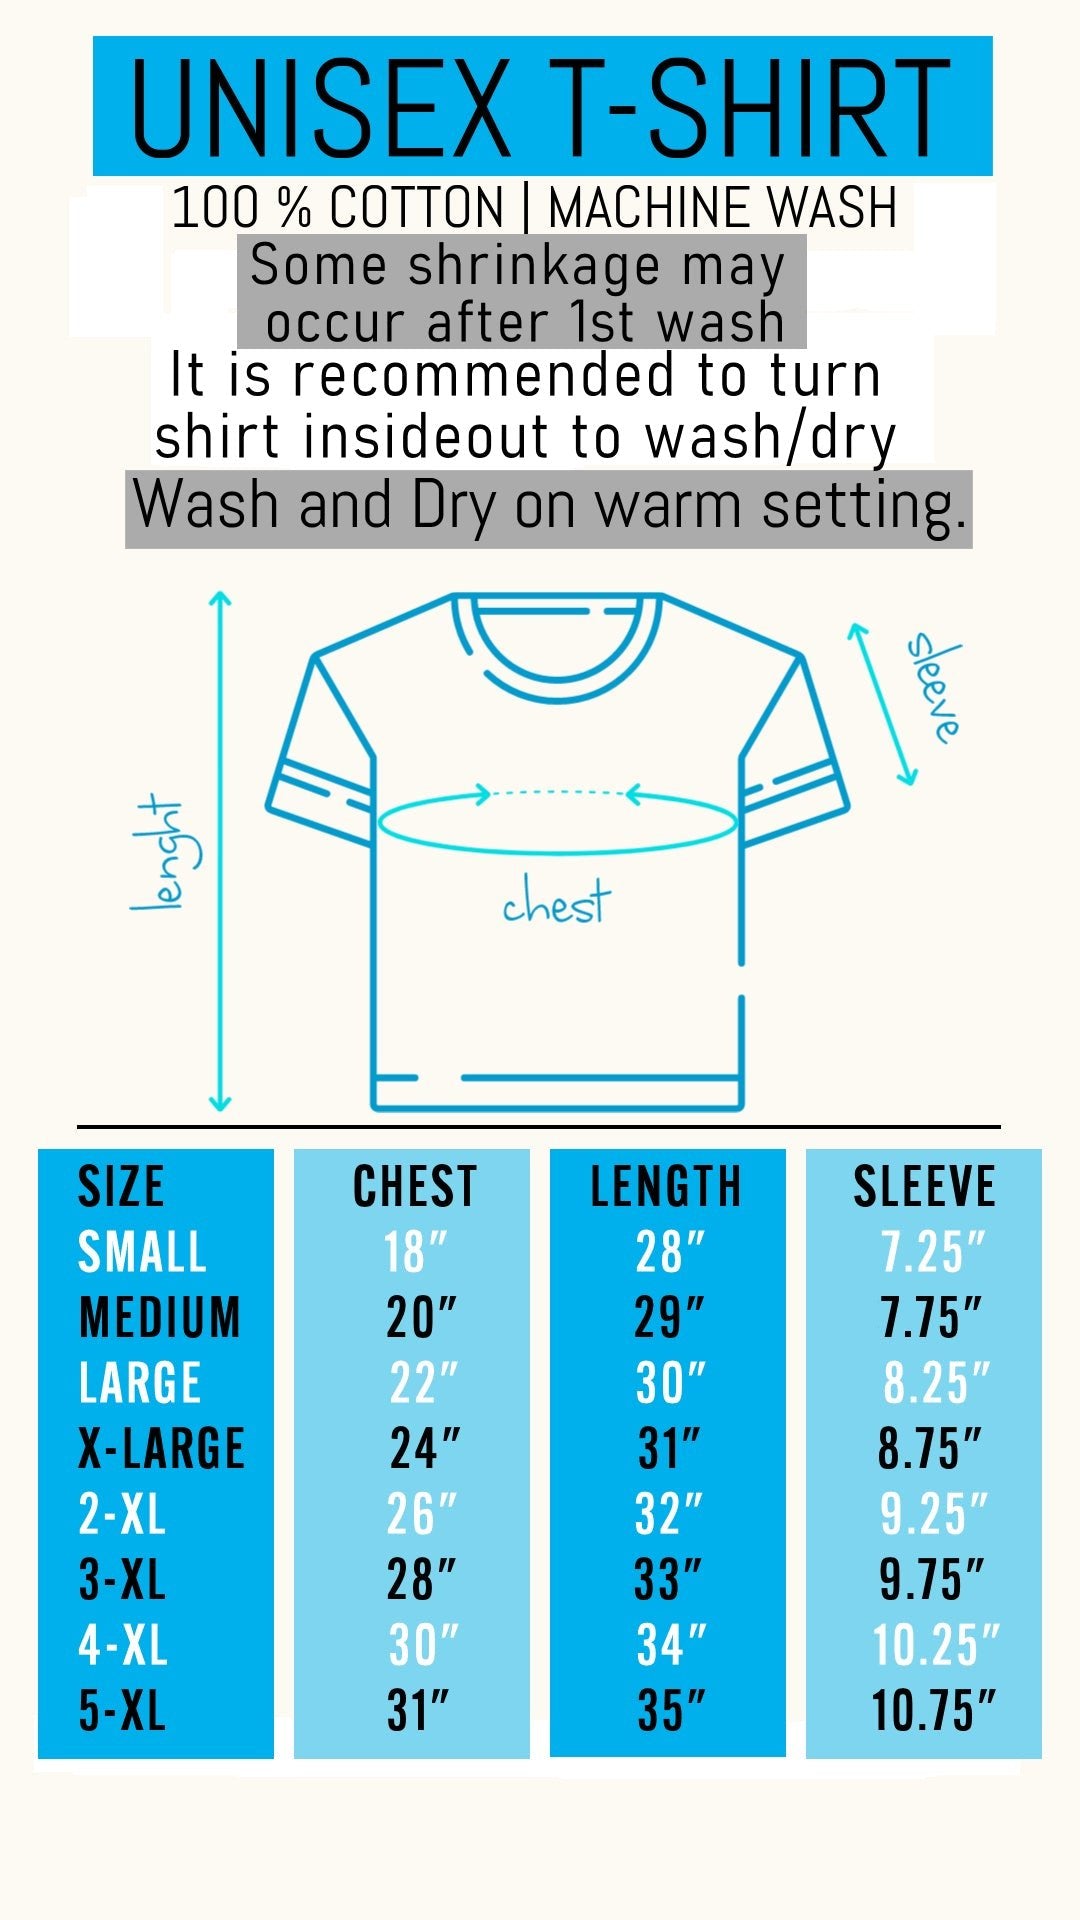 CrazyYetiClothing, CYC, The Energy to Pretend (Unisex Tee), T-Shirt